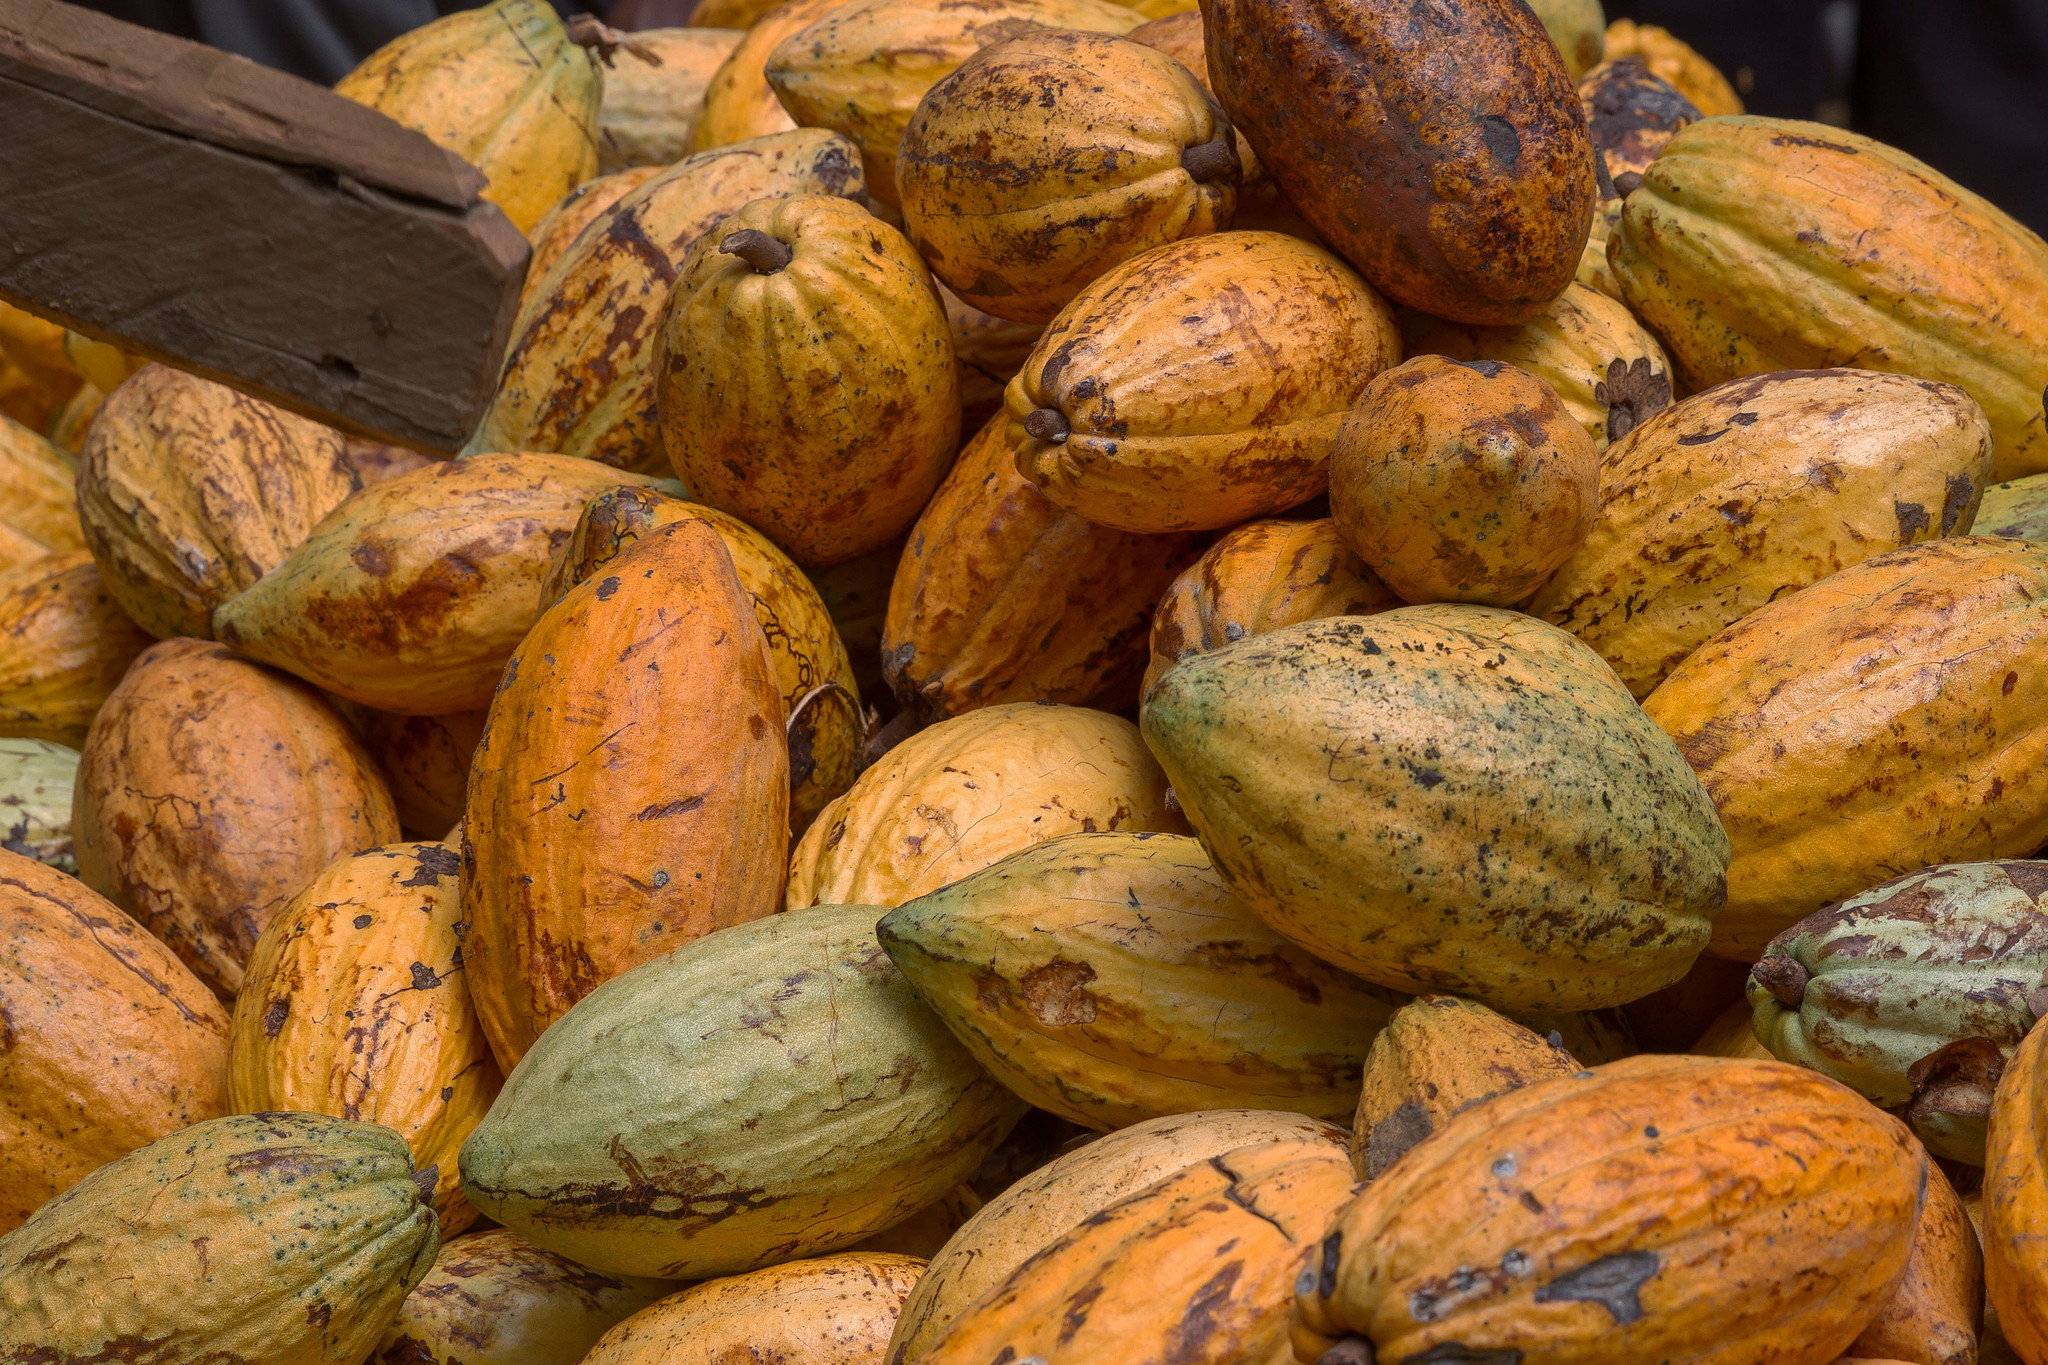 Ripe Cocoa pods from a cocoa farm in Ghana.